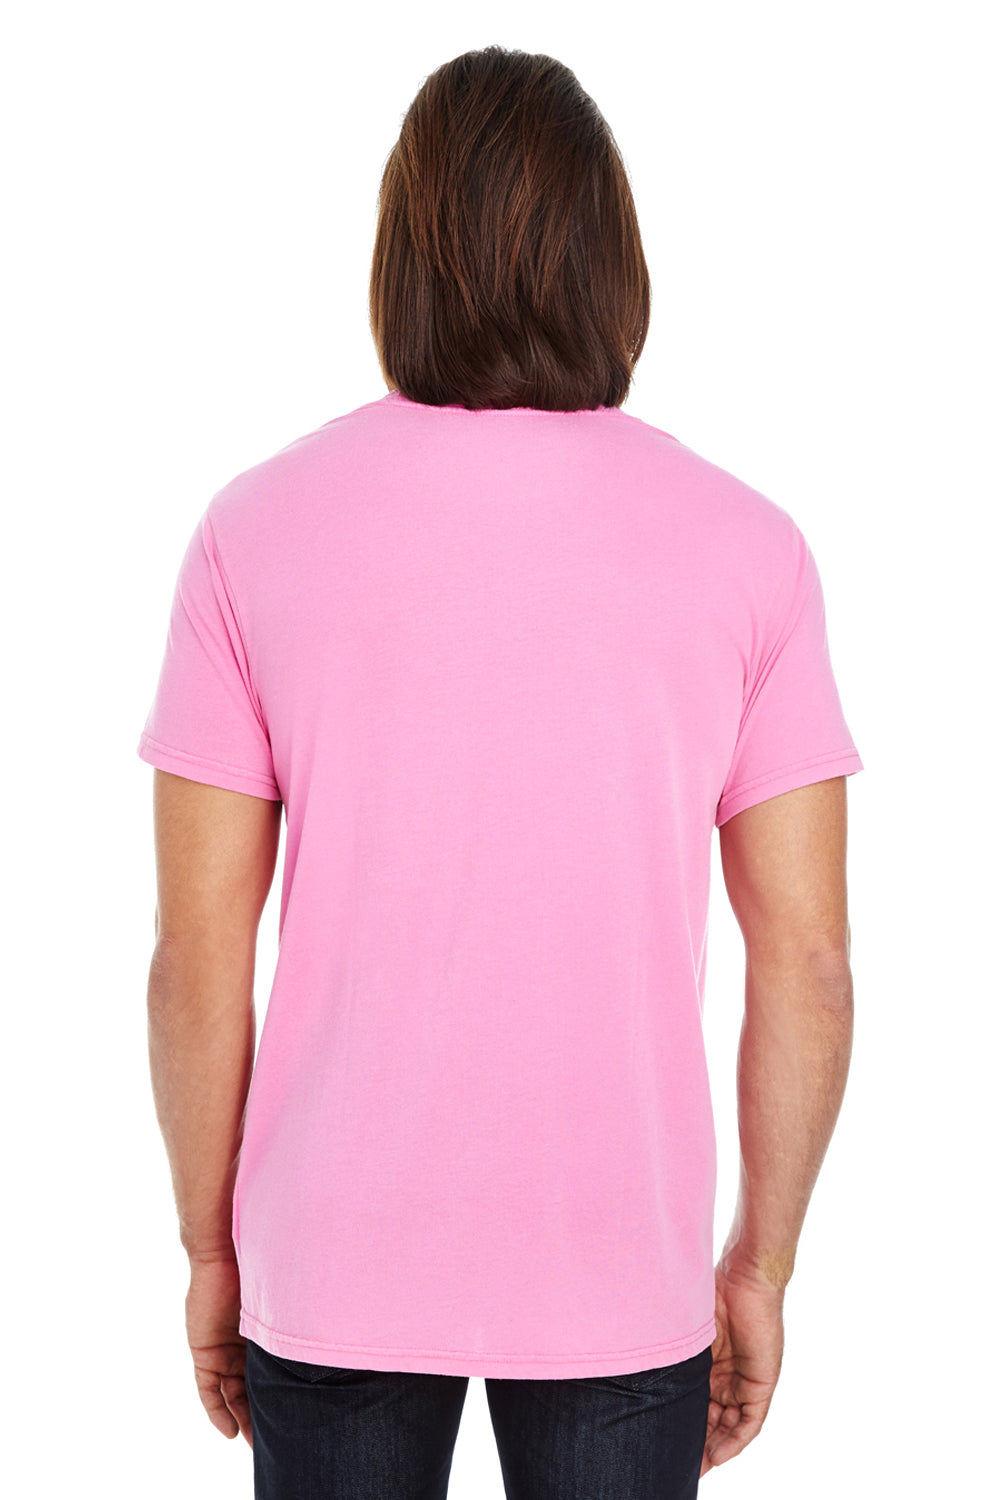 Threadfast Apparel 130A Mens Short Sleeve Crewneck T-Shirt Charity Pink Back